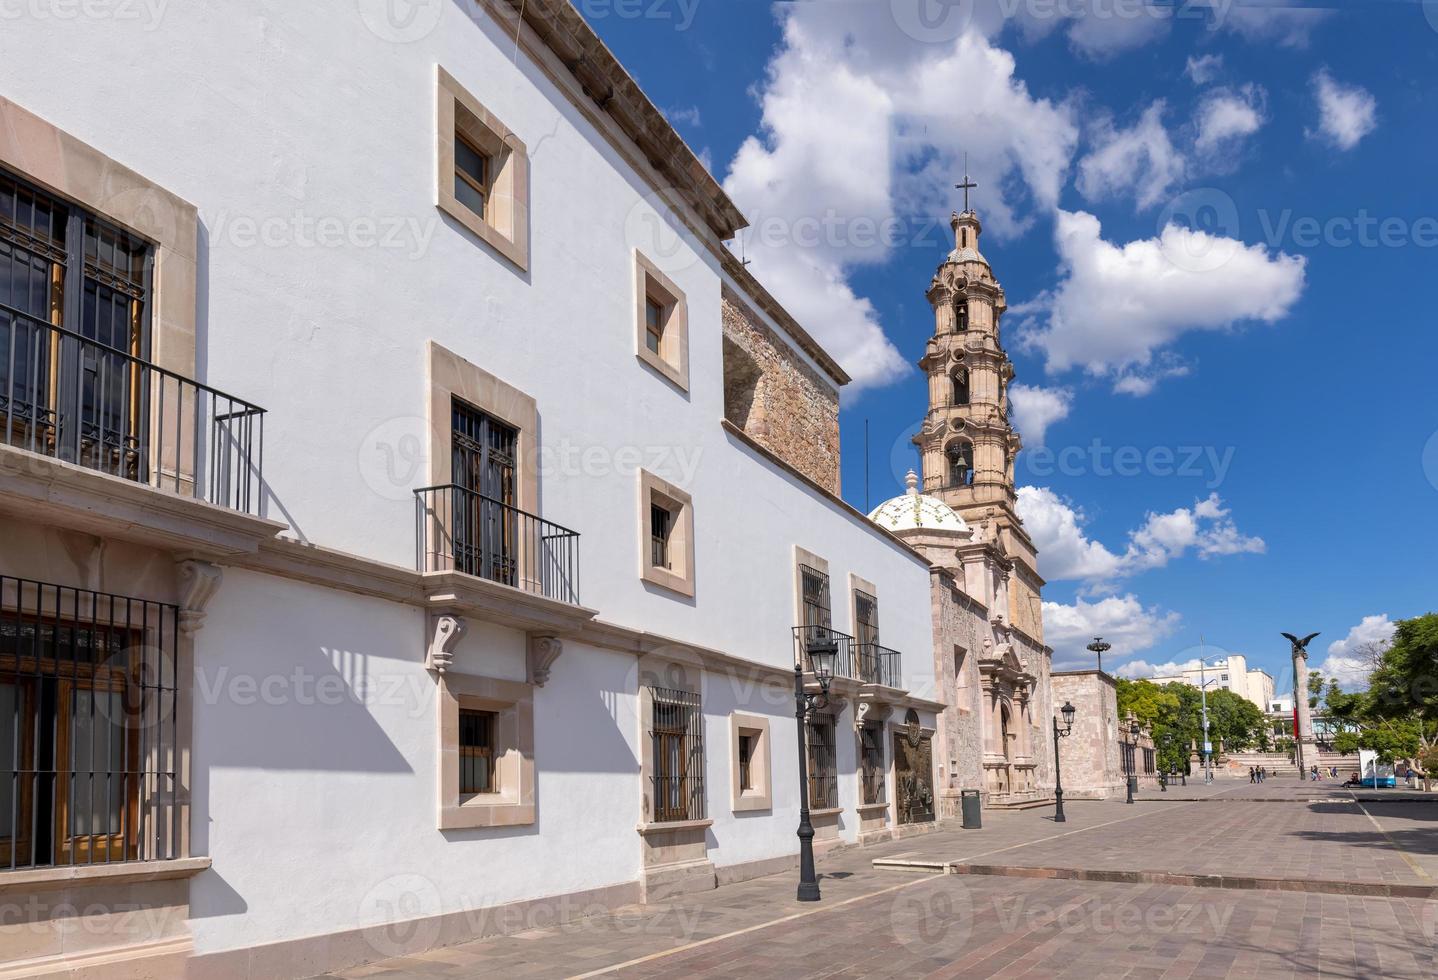 centro de méxico, iglesias católicas de aguascalientes, calles coloridas y  casas coloniales en el centro histórico